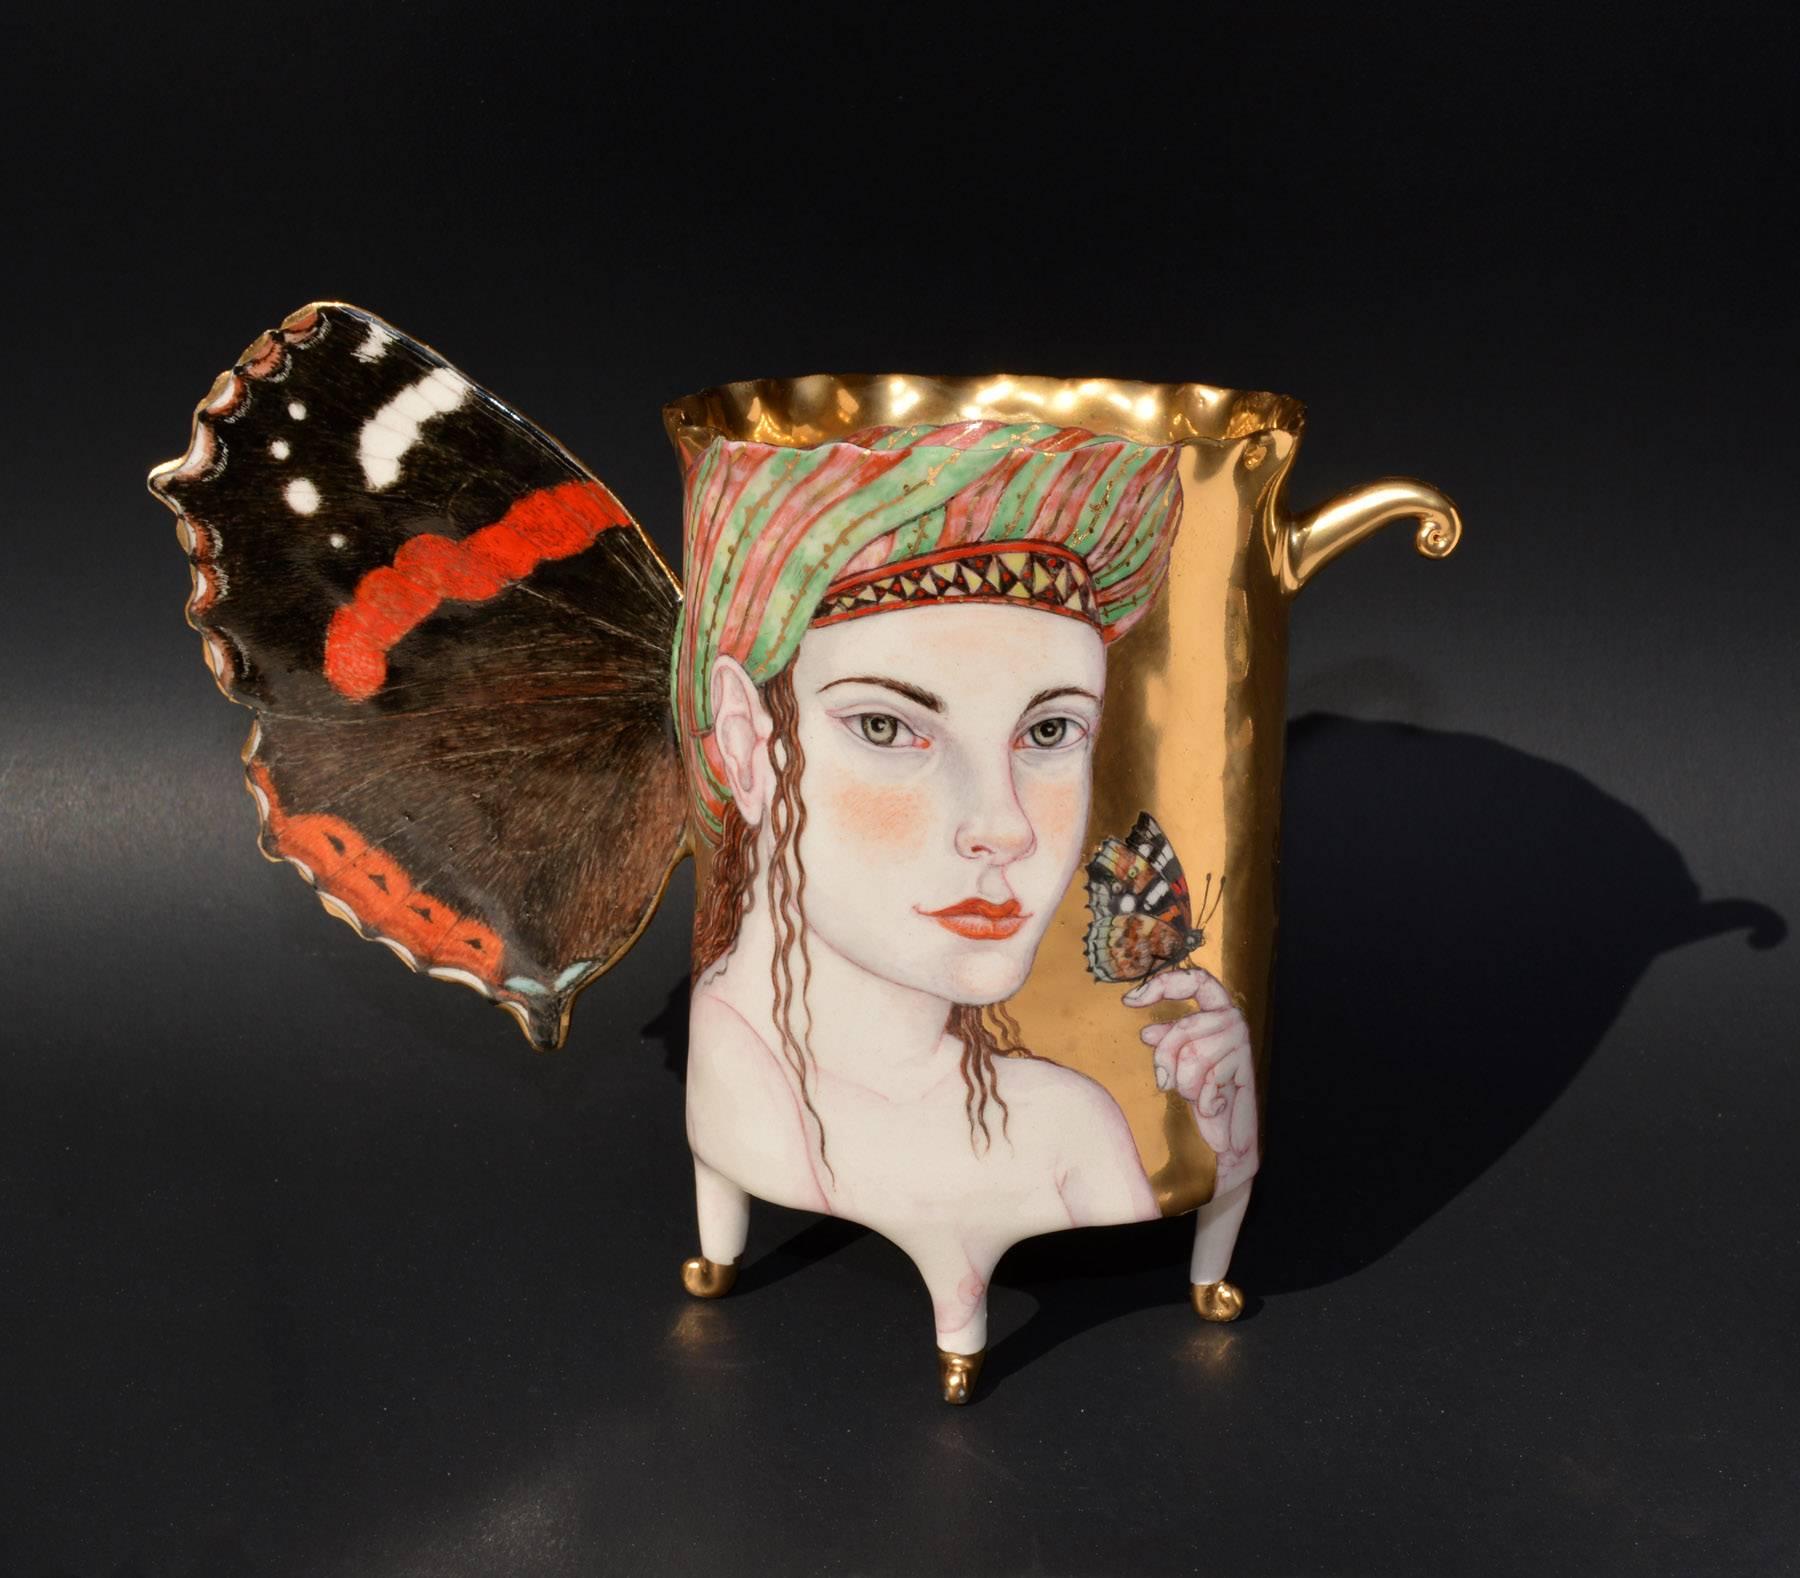 Irina Zaytceva Portrait Painting - "Cardinal Butterfly Cup", Contemporary Porcelain Sculpture, Painted Illustration